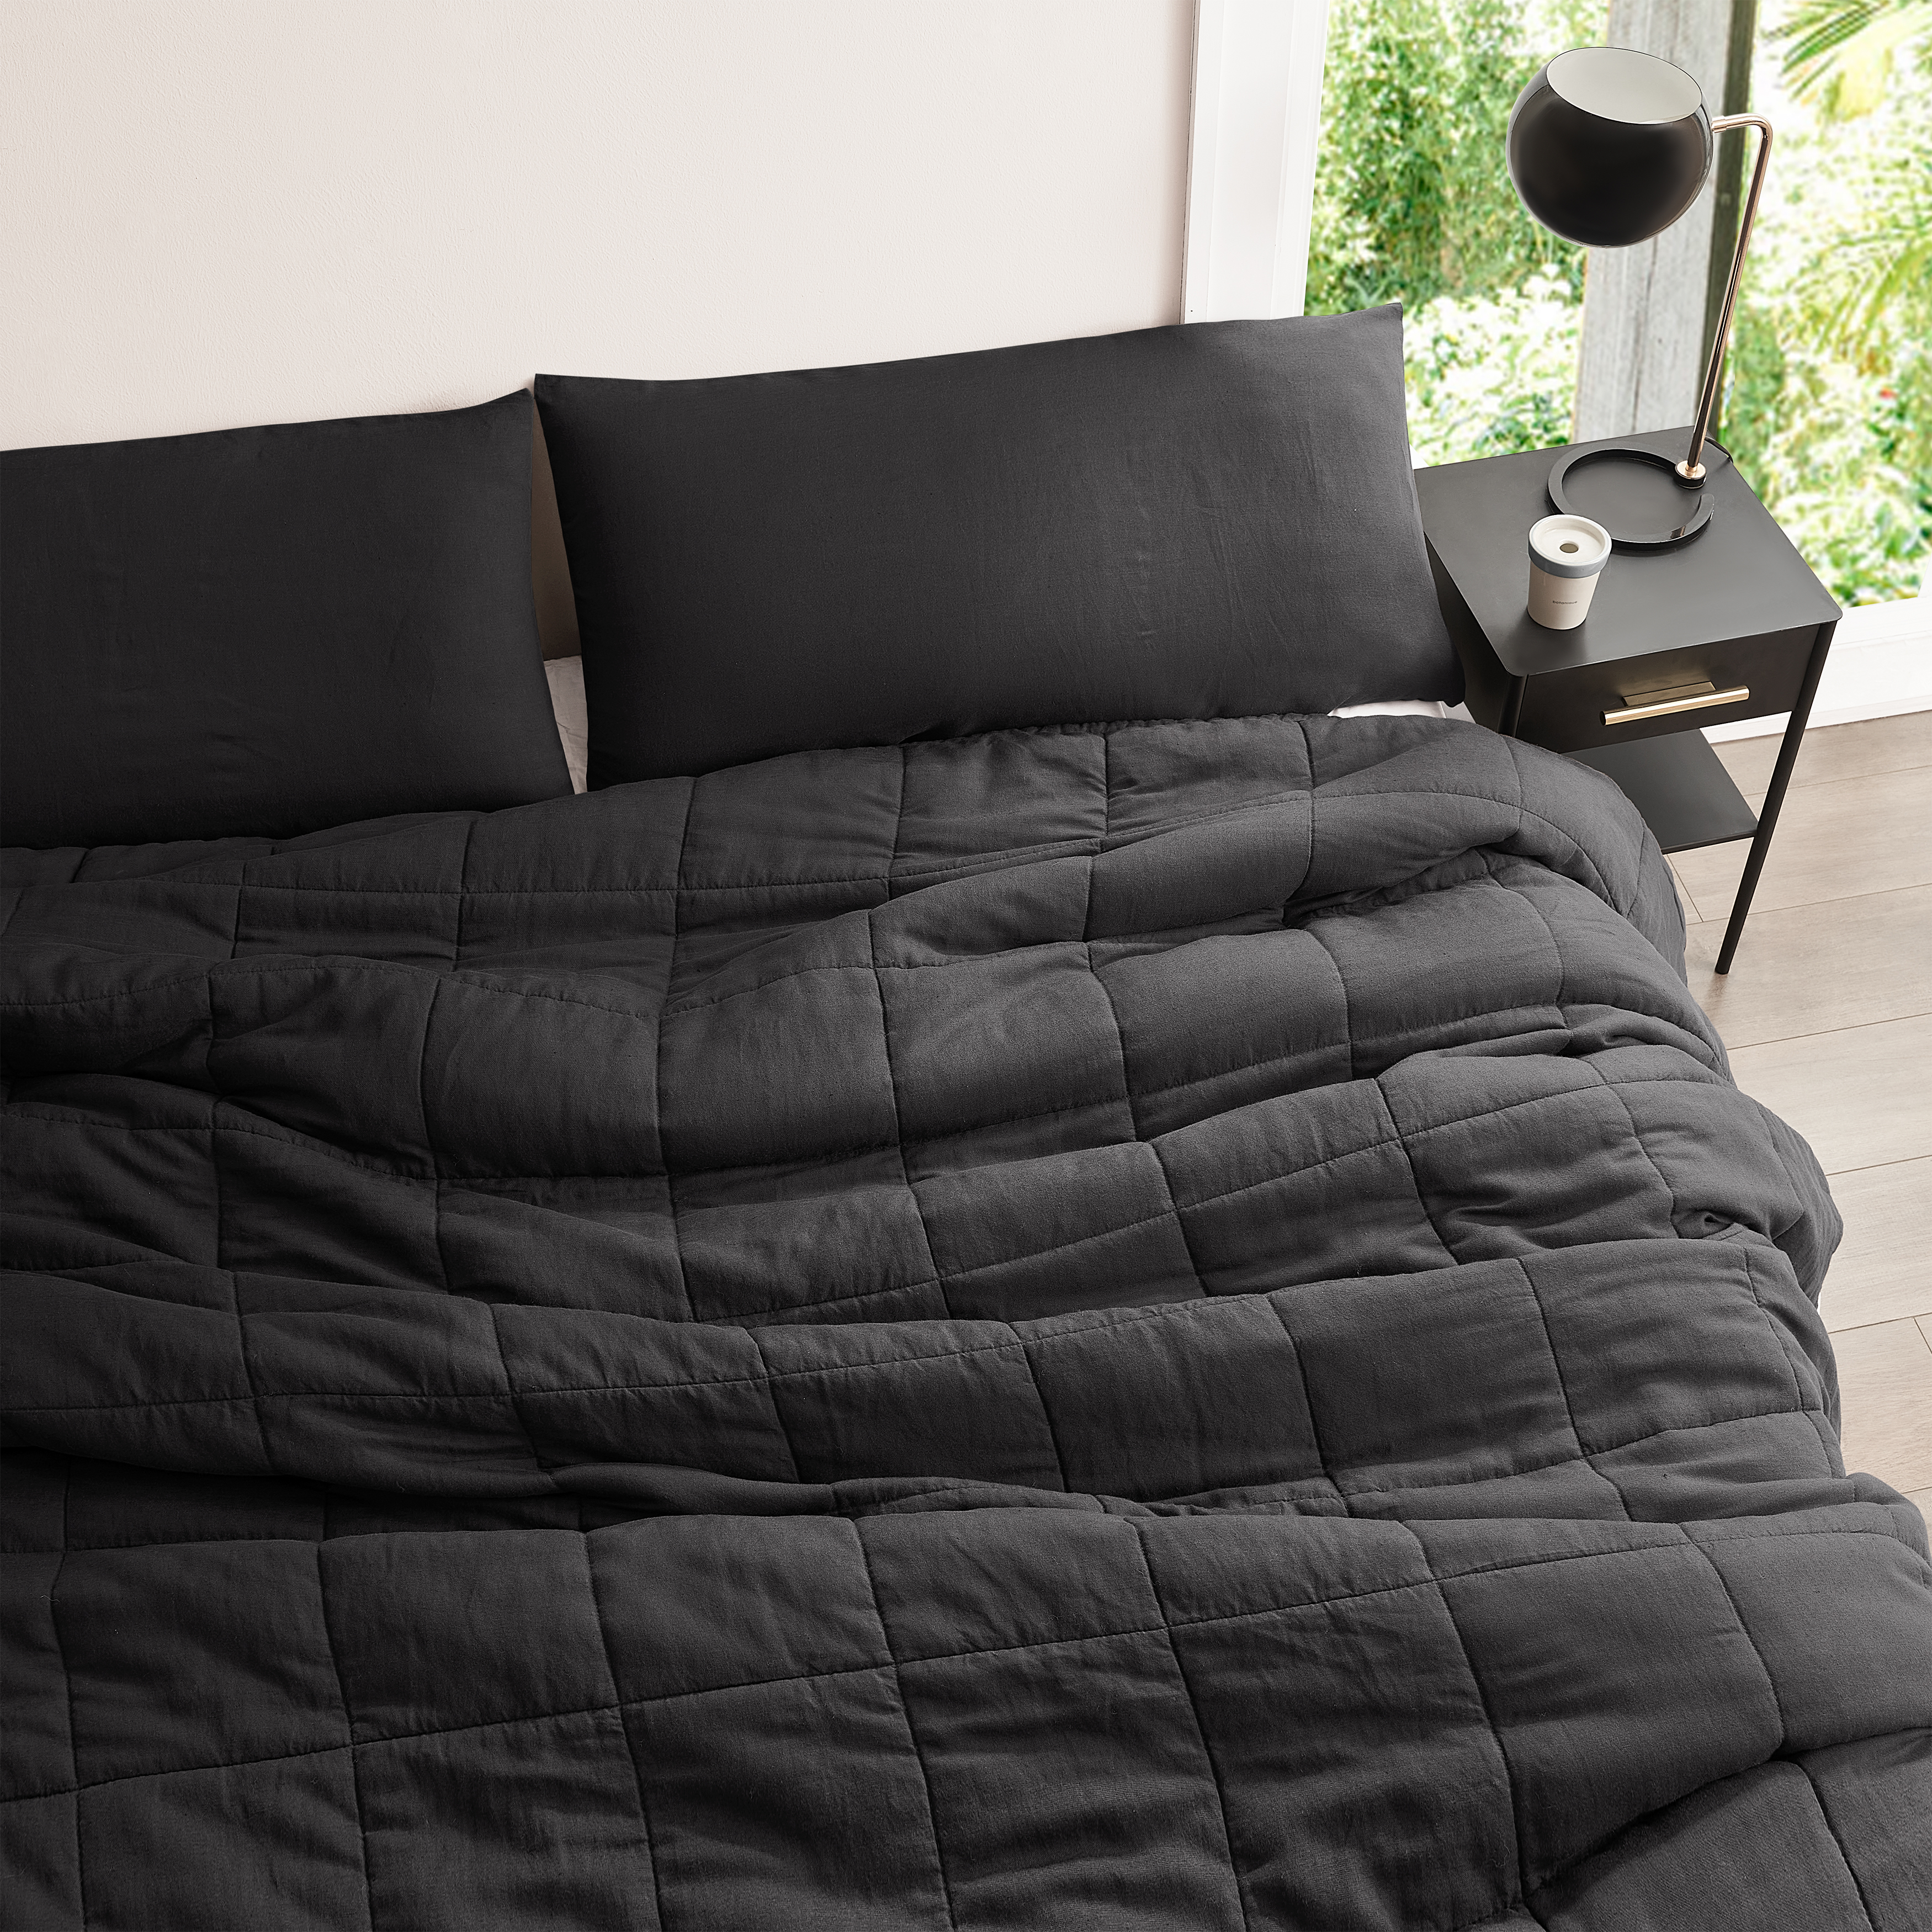 Dark Sky Reserve - Bamboo Linen Oversized Comforter - Portugal Made - Faded Black